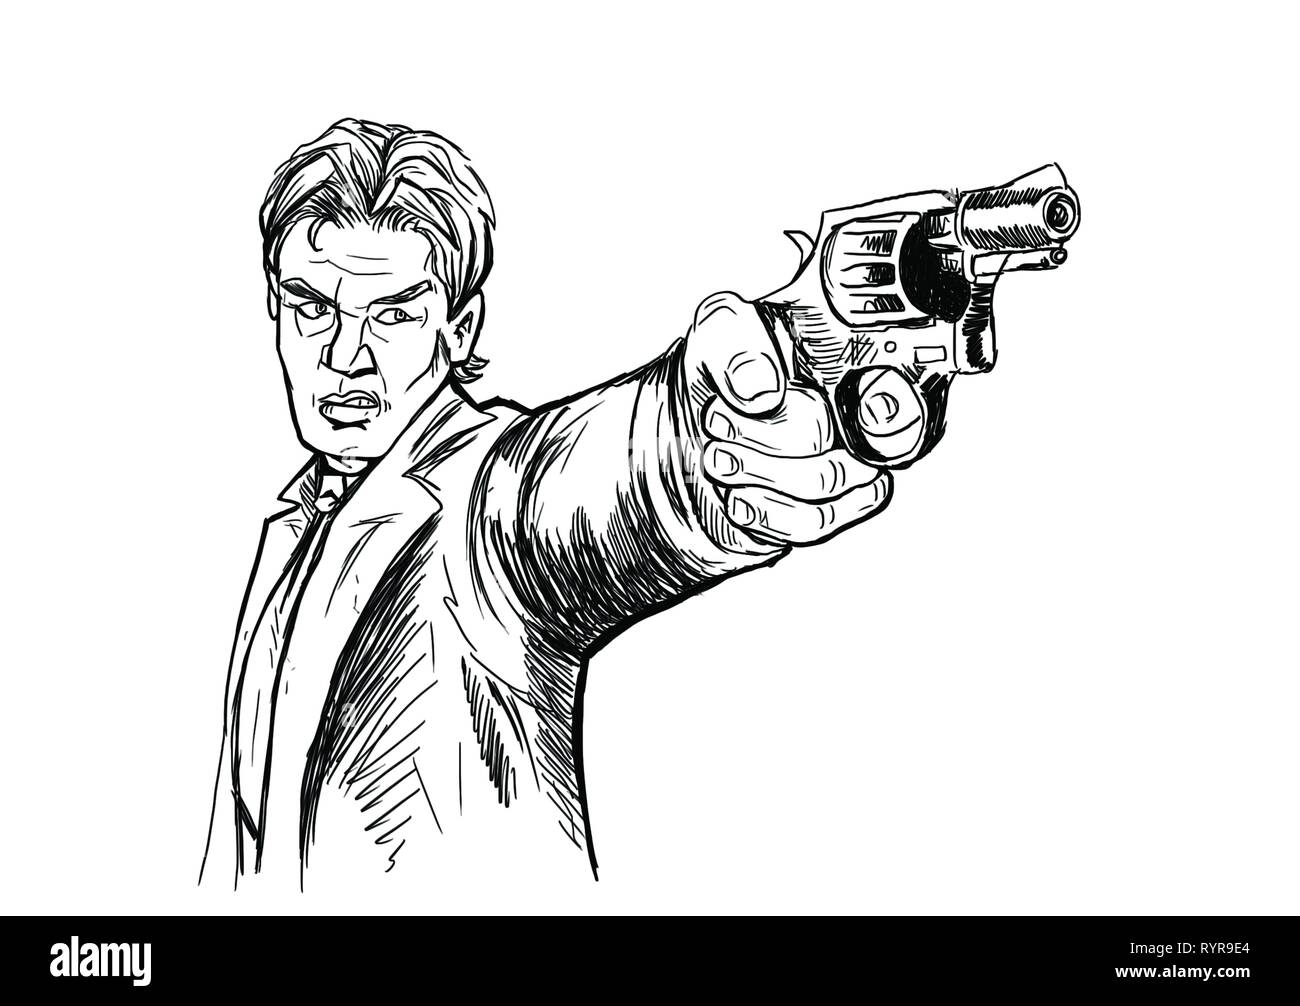 comic book character holding a gun illustration Stock Photo